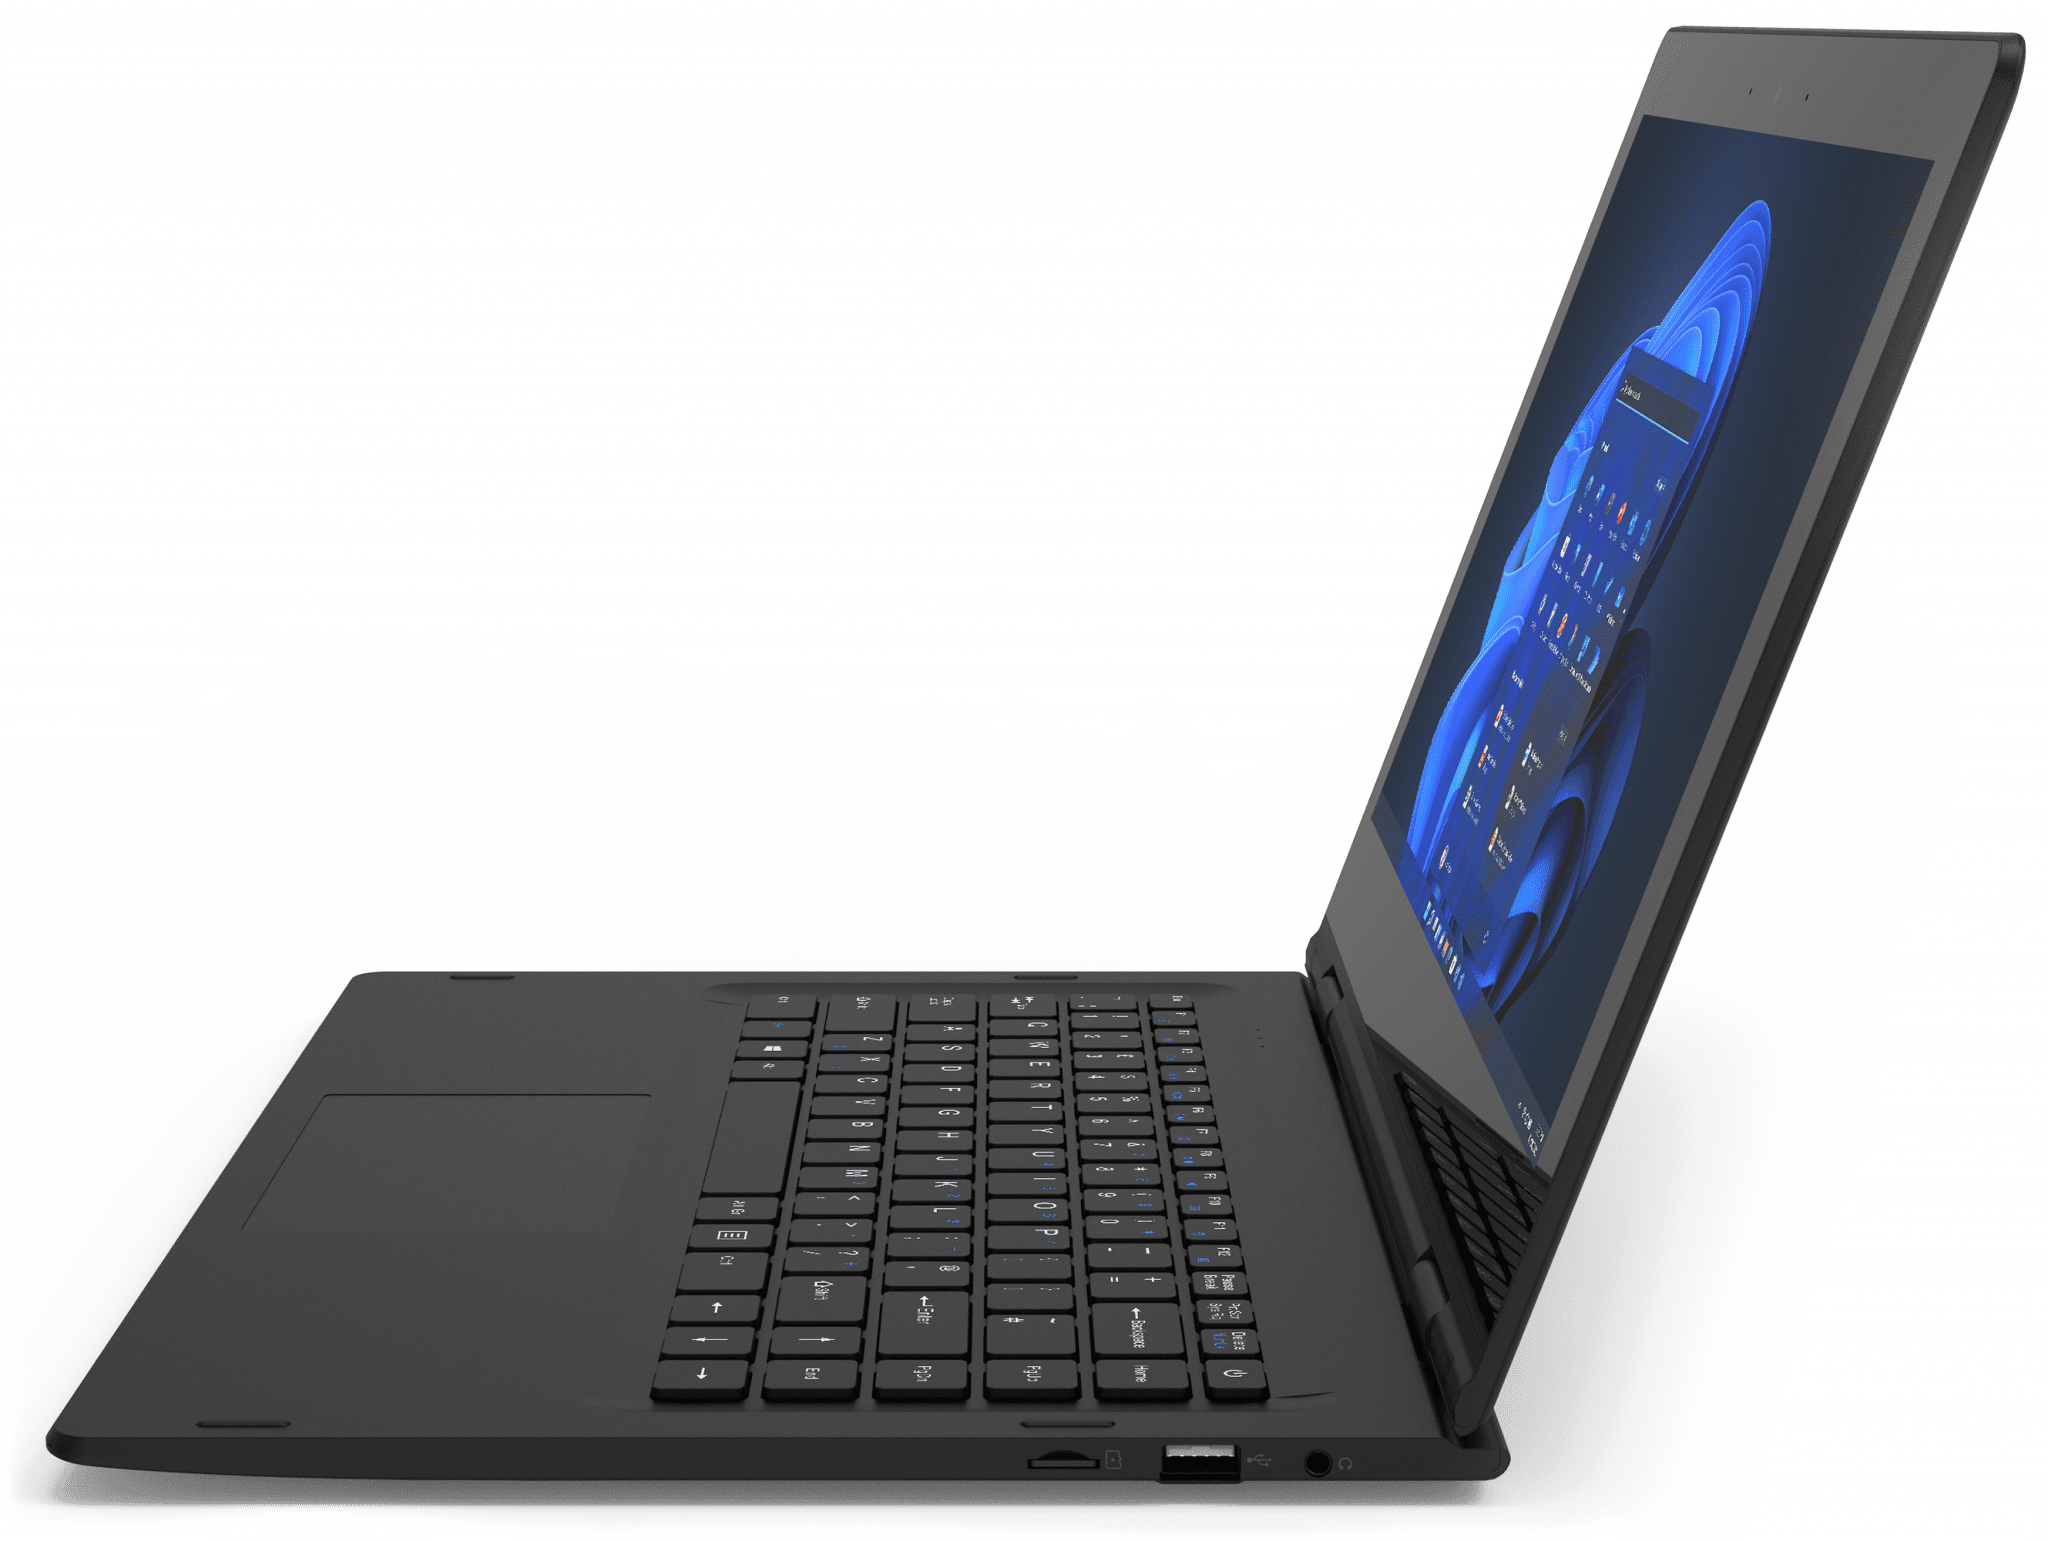 GeoFlex 140 – Geo Computers